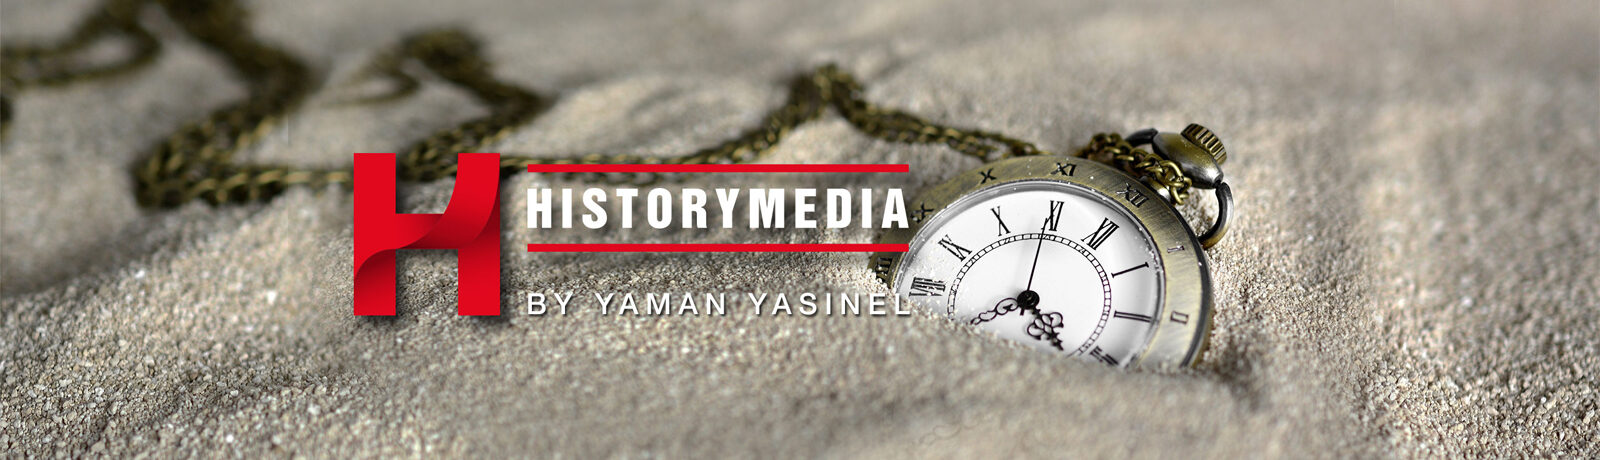 HISTORYMEDIA by YAMAN YASINEL